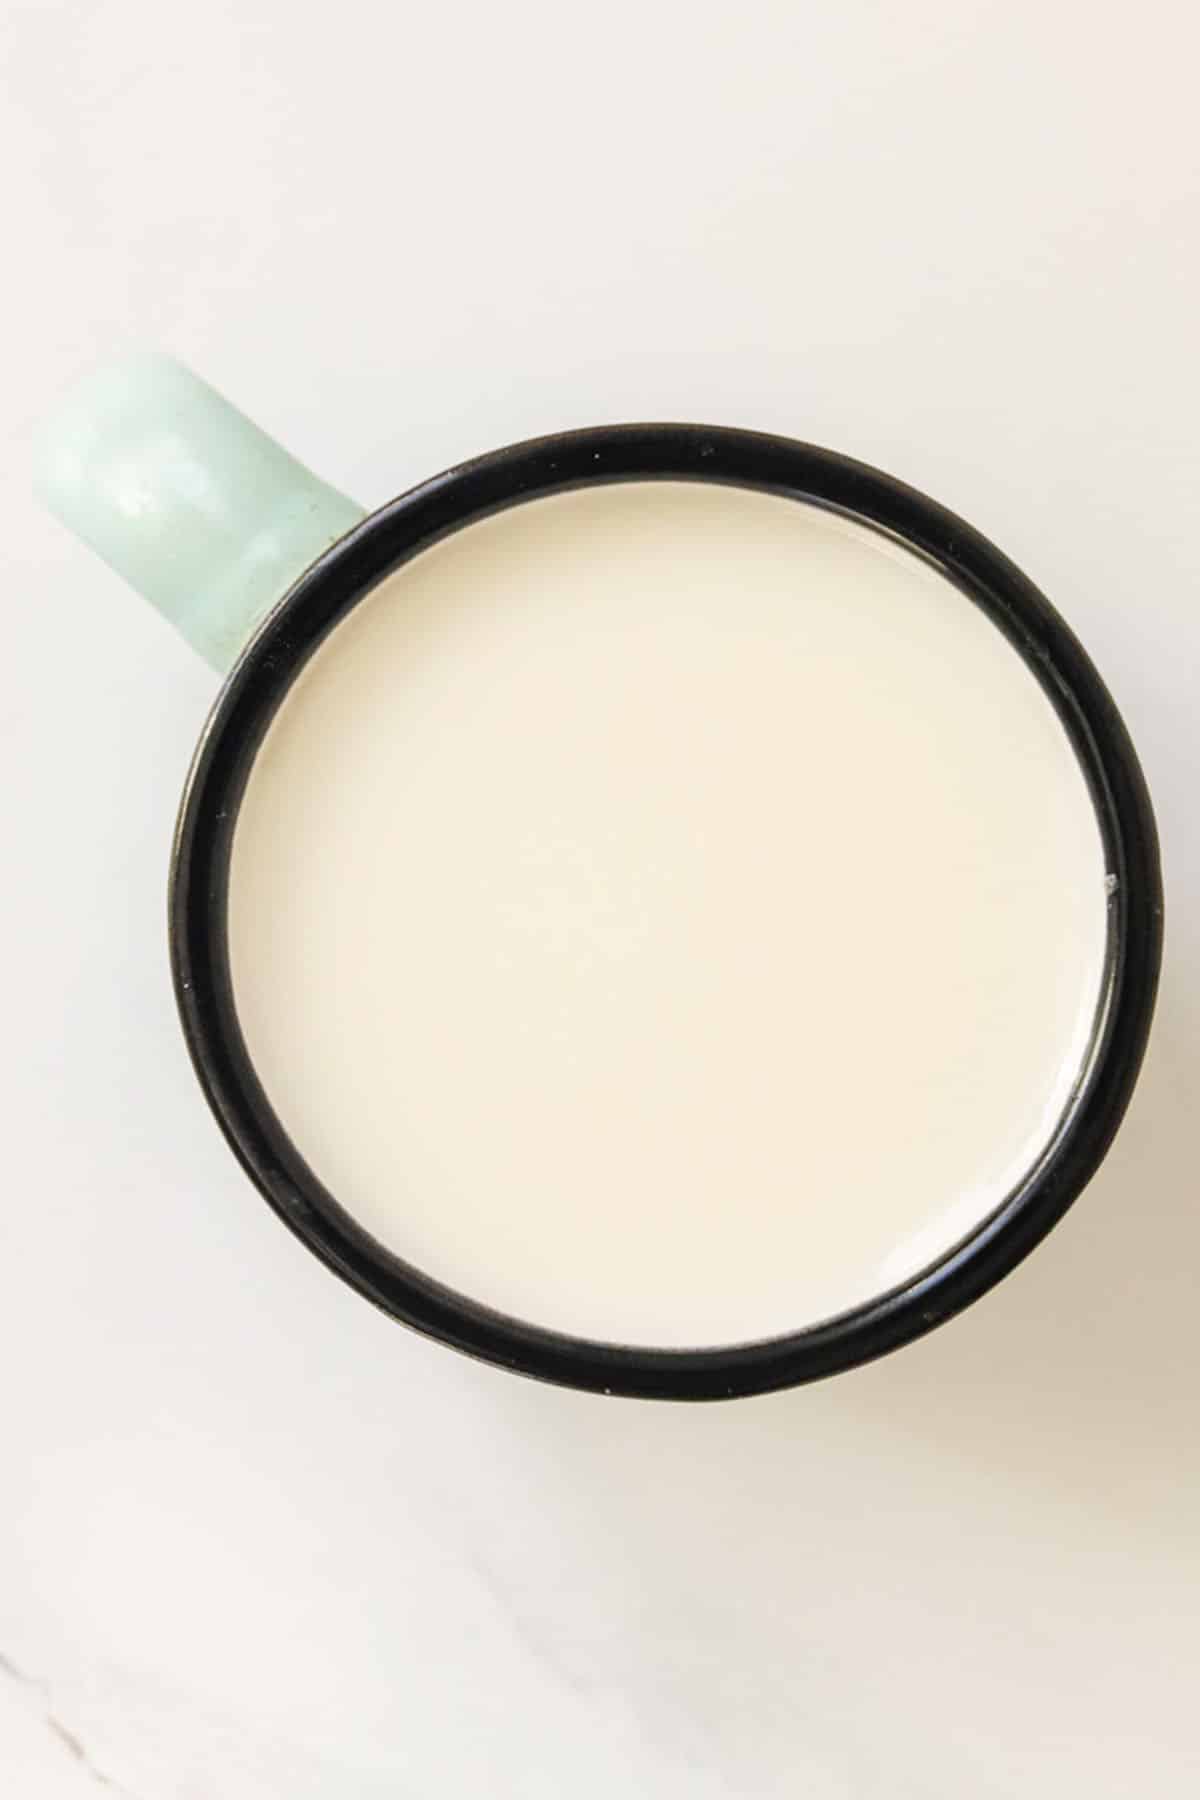 Milk in a mug.